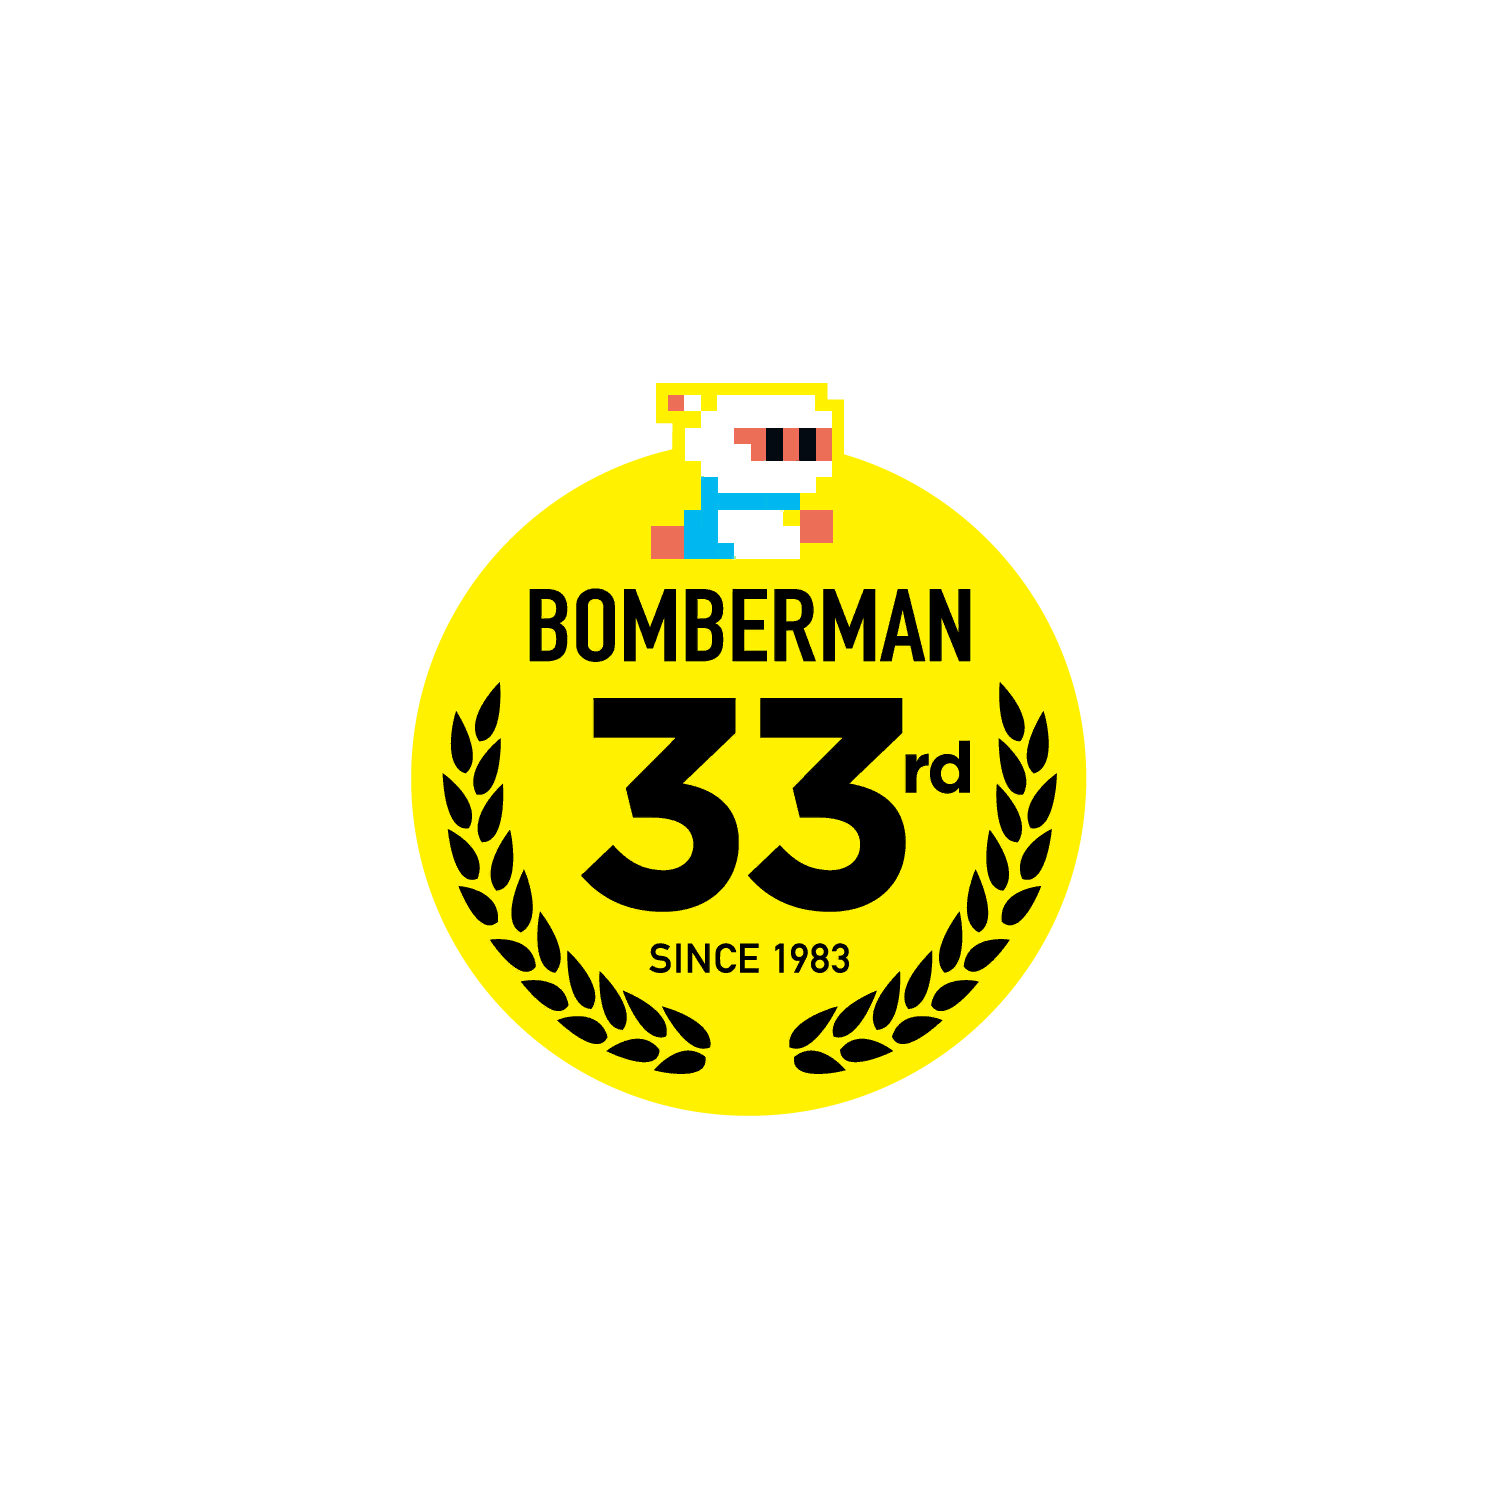 Super Bomberman R - 33rd Anniversary Logo